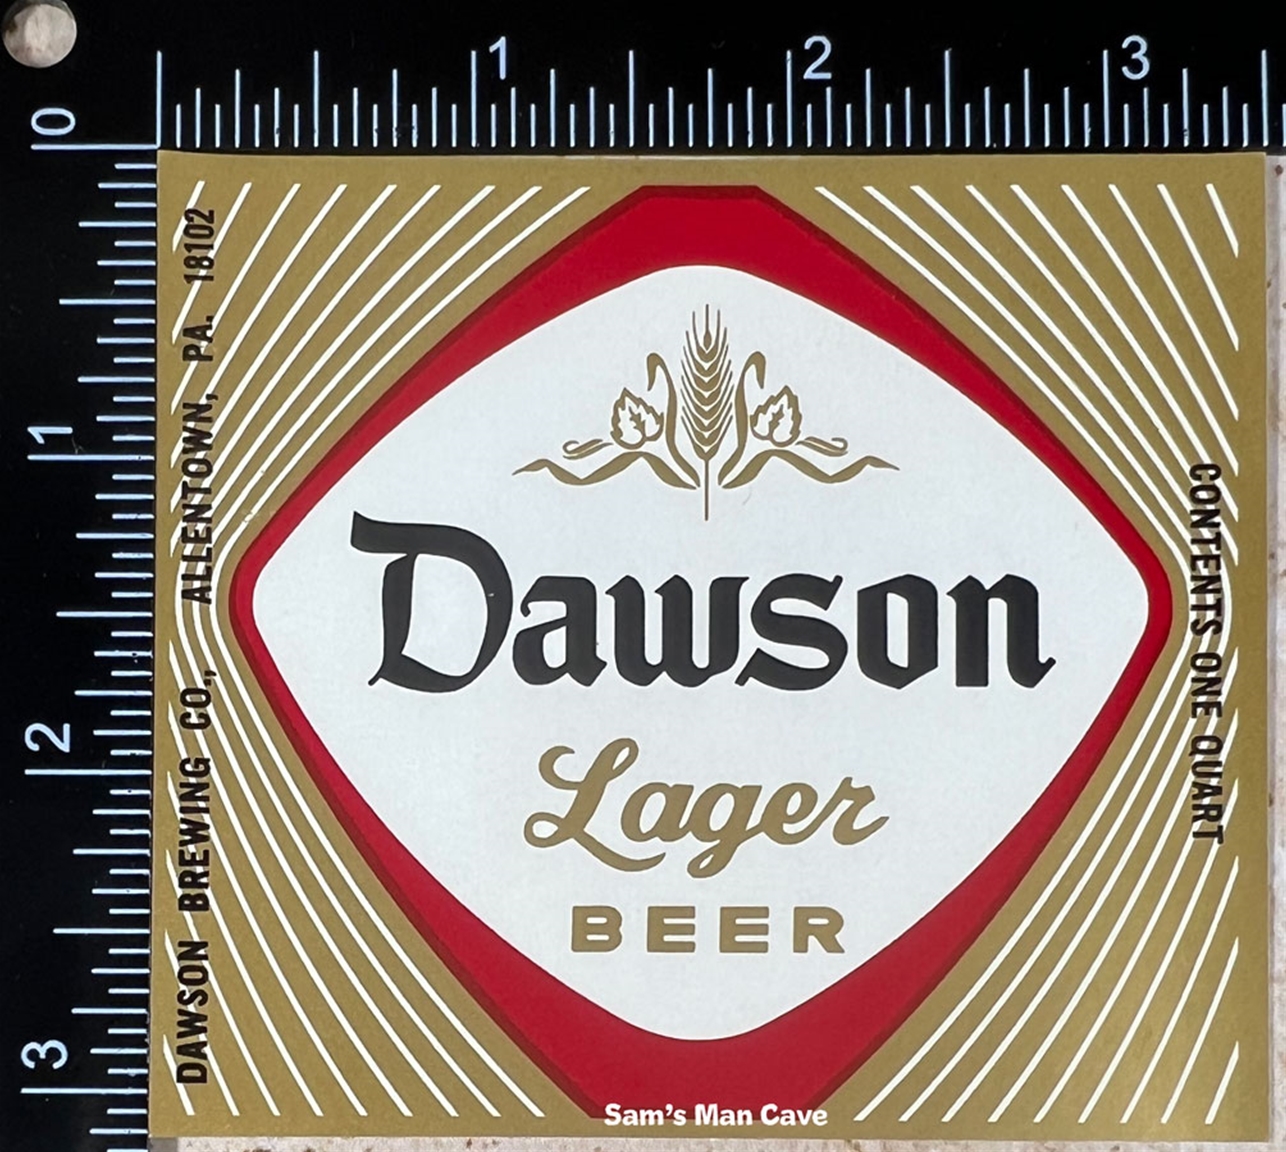 Dawson Lager Beer Label